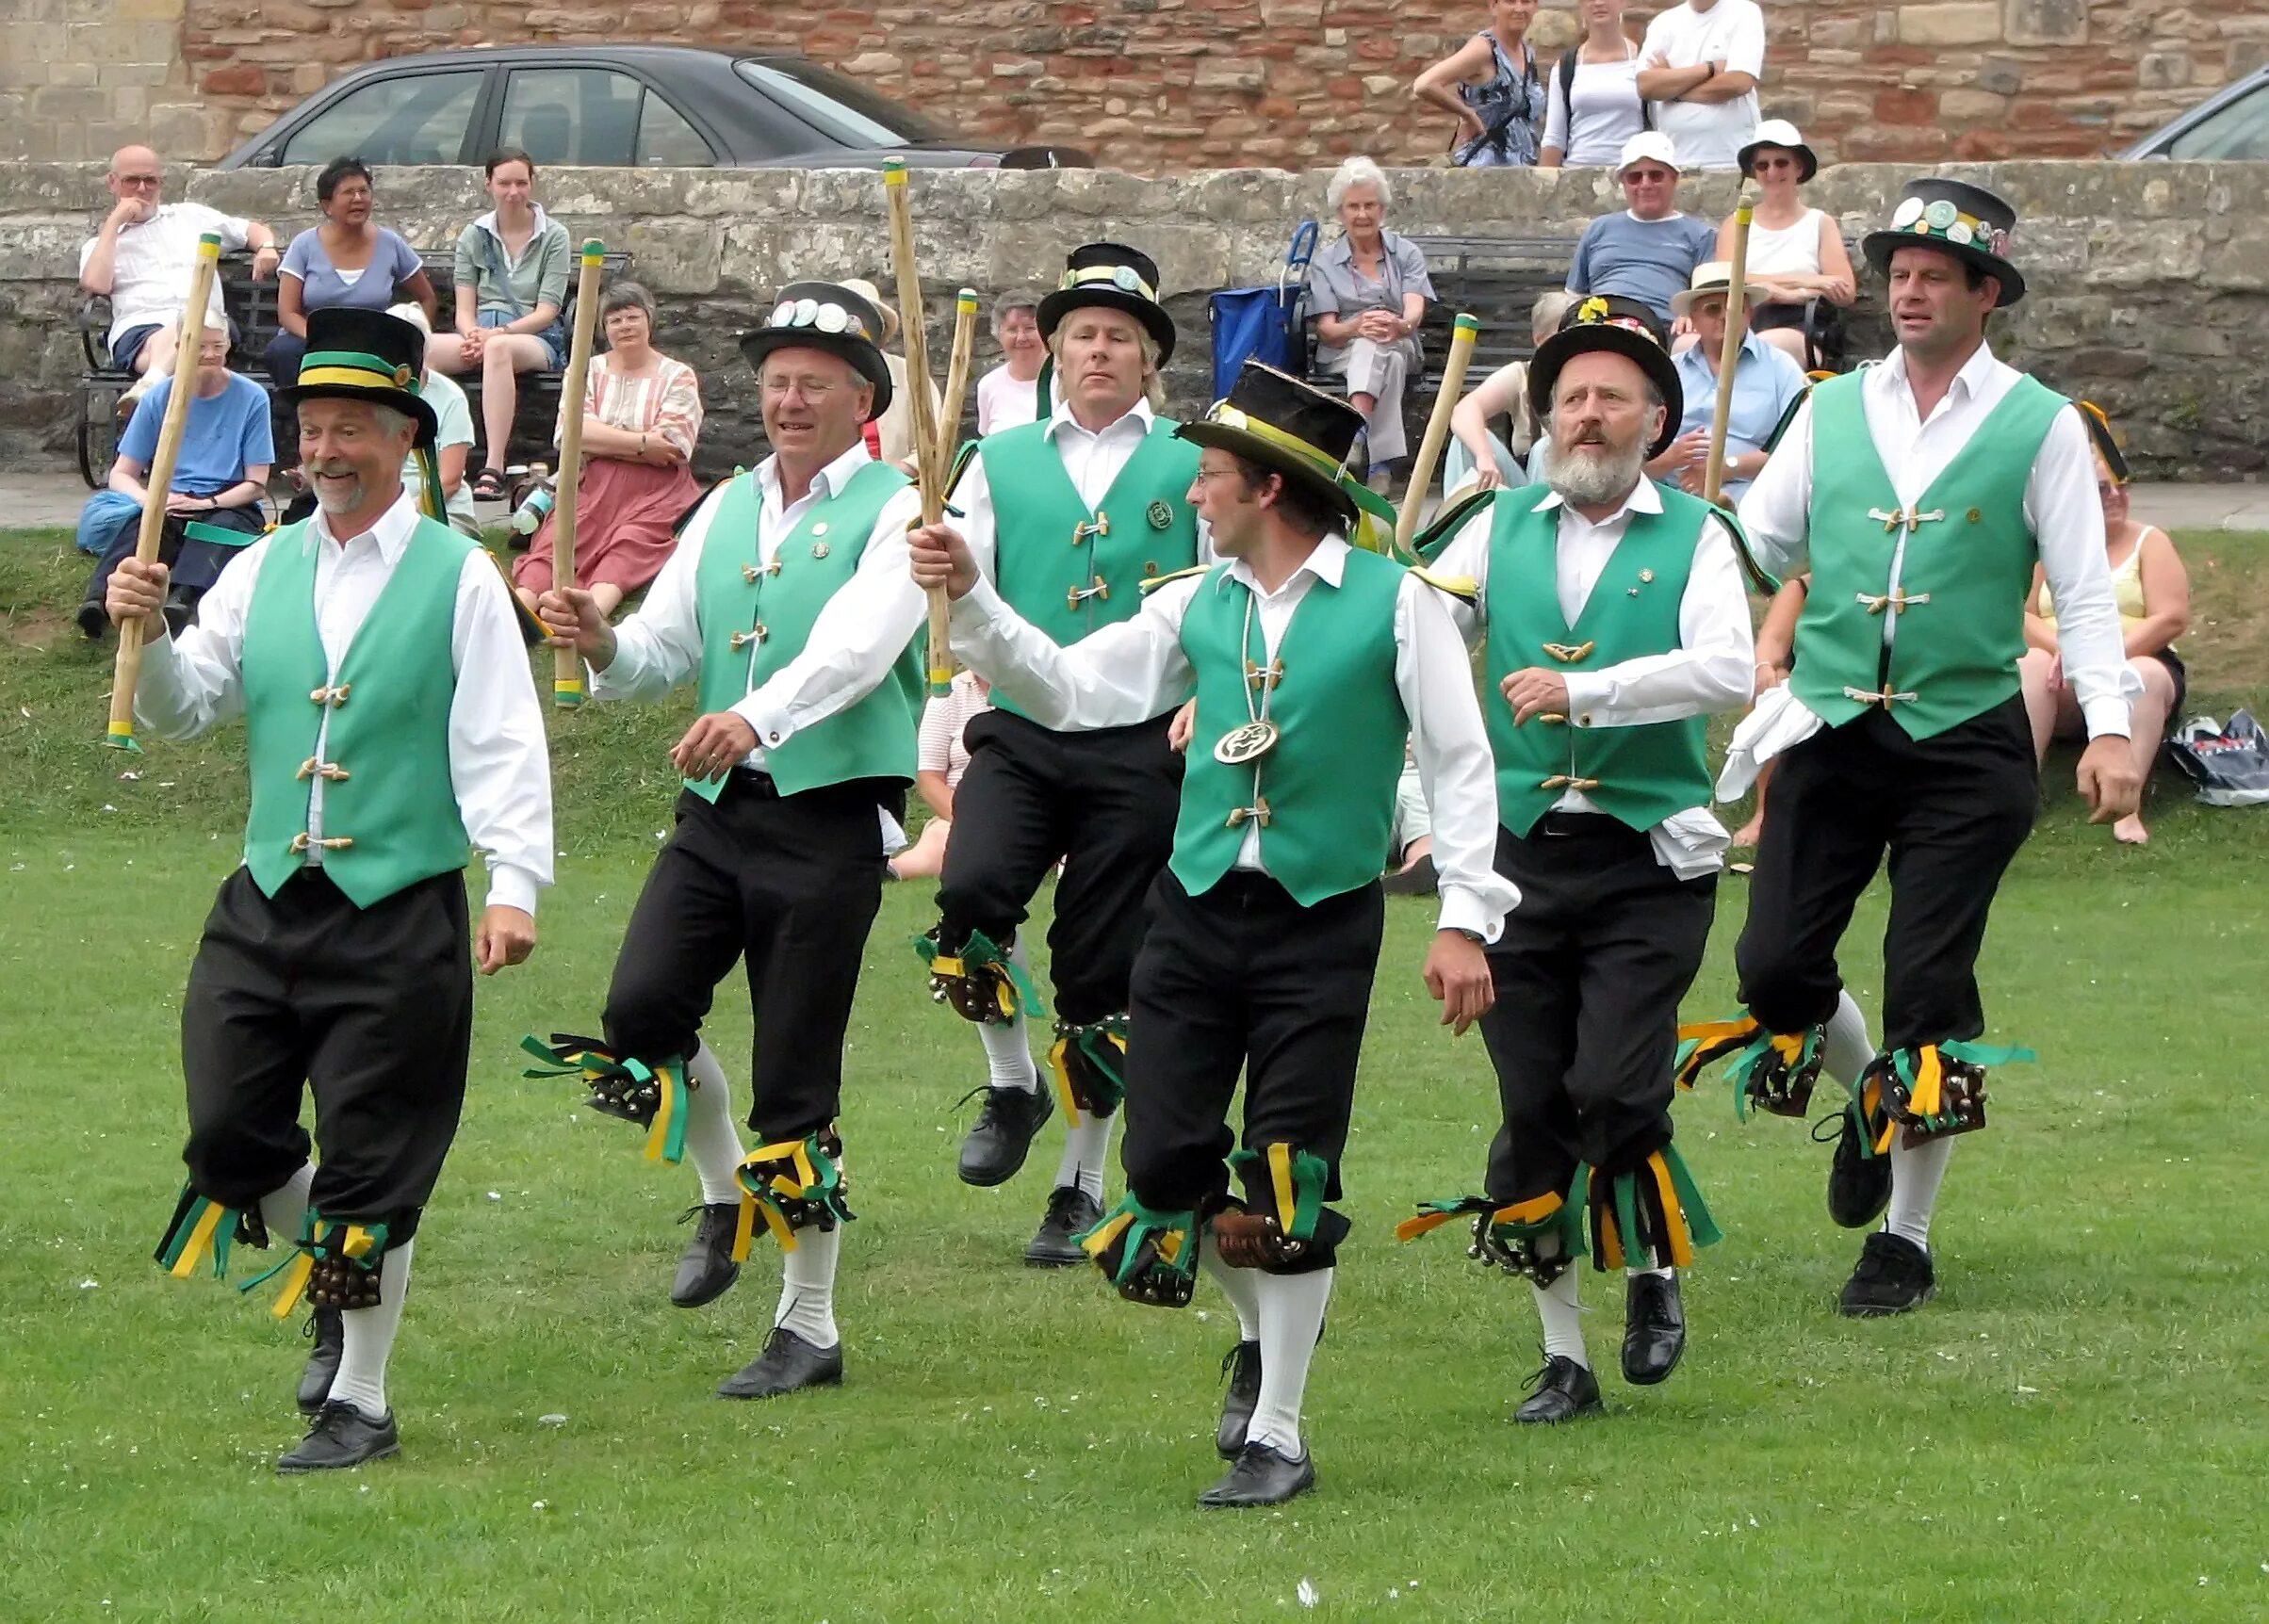 Irish traditions. Моррис дансинг Великобритания. Танец англичан Моррис. Моррис танцы в Британии. Morris Dancers в Великобритании.